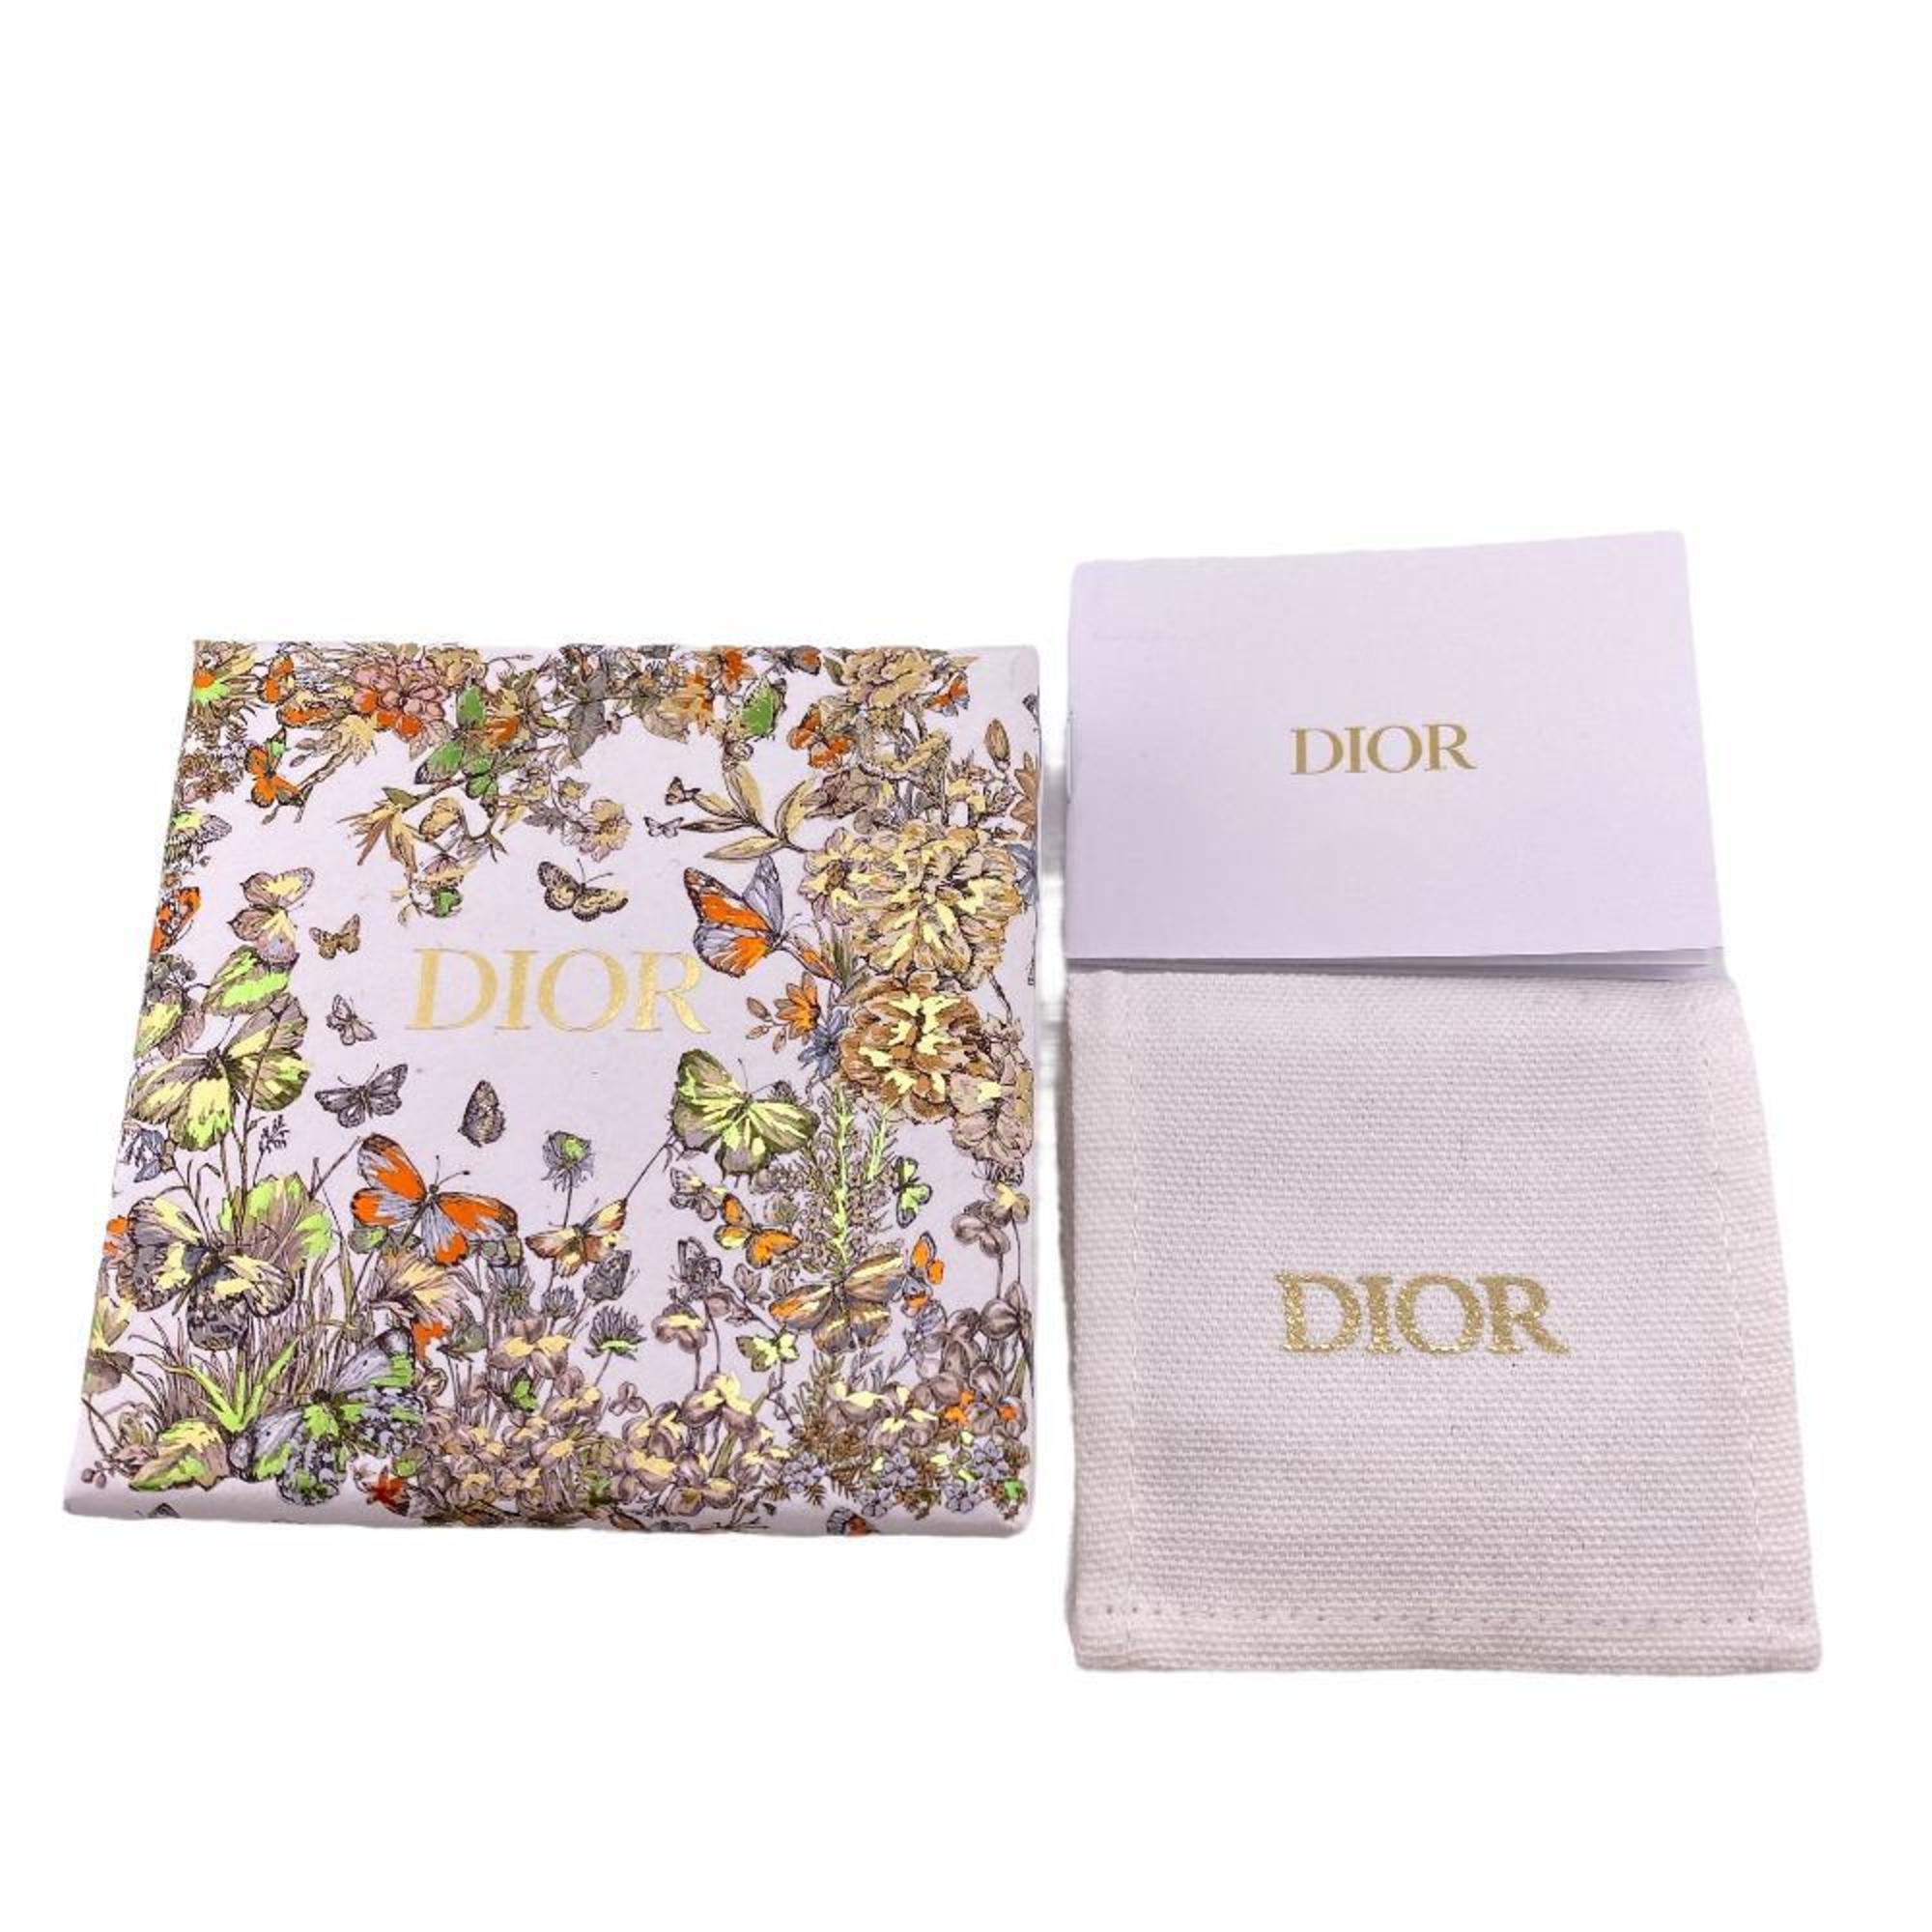 Christian Dior Dior code earrings silver ladies Z0005219